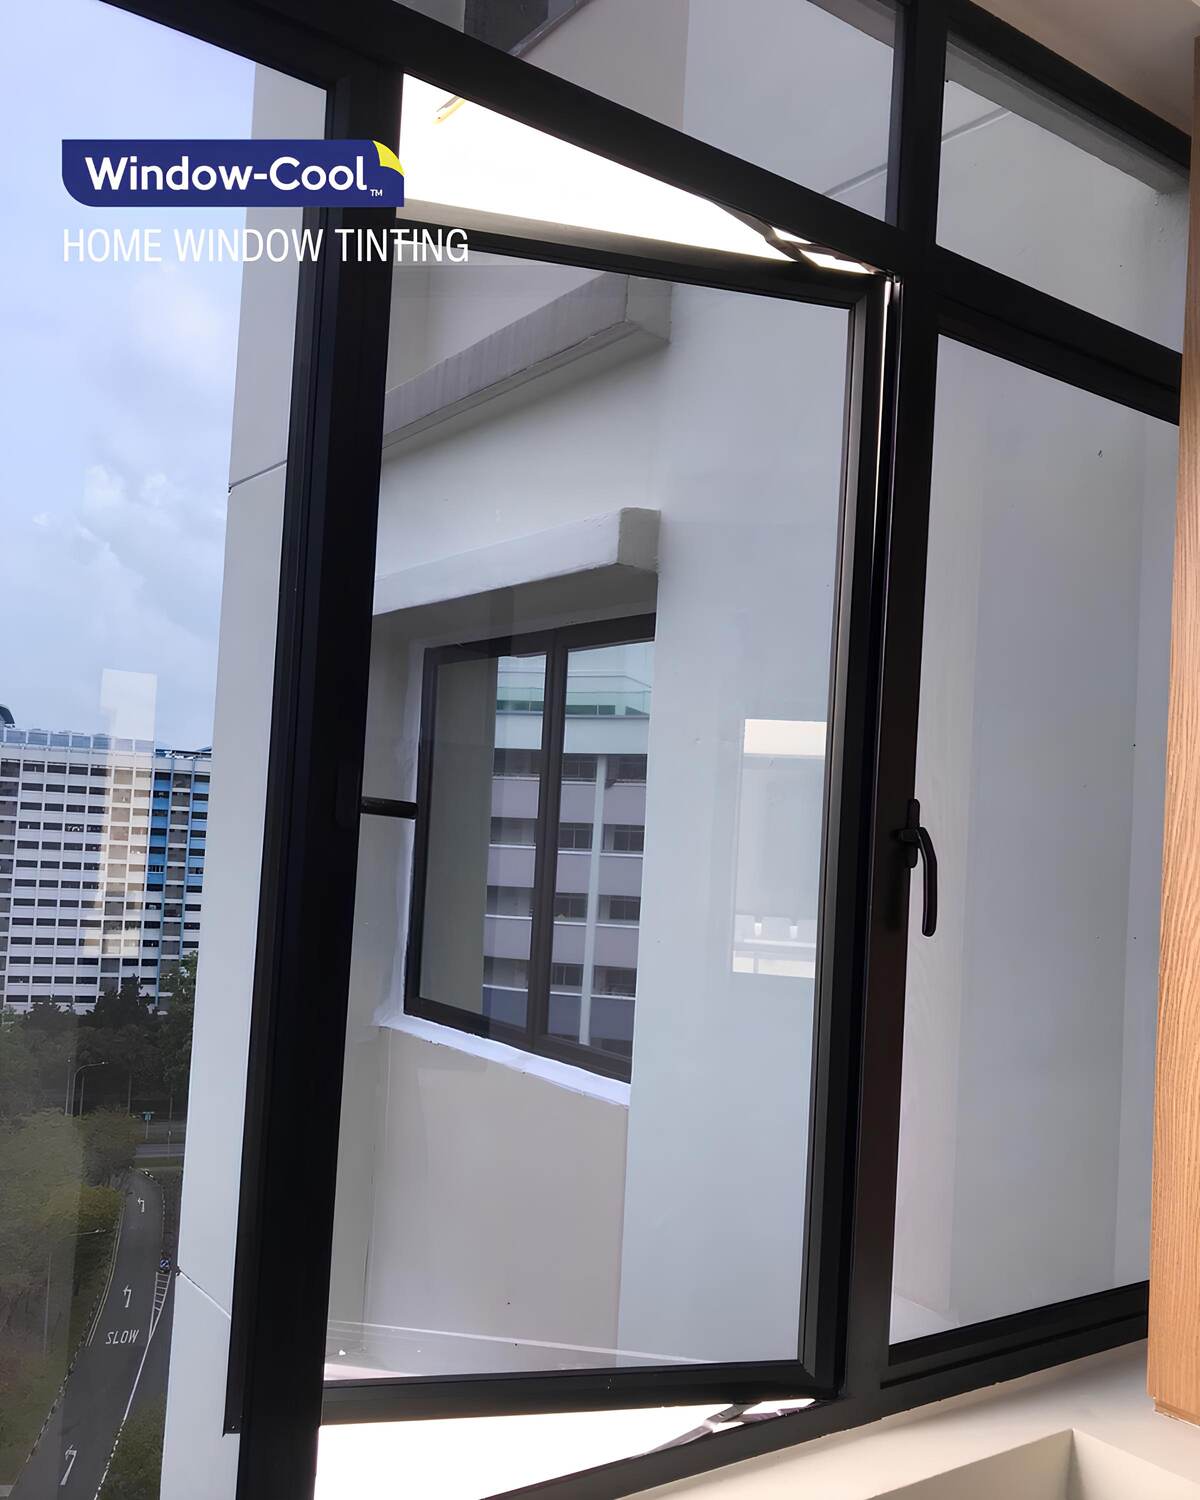 Heat Blocking Window Film for HDB Home Windows - Home Window Film Tint